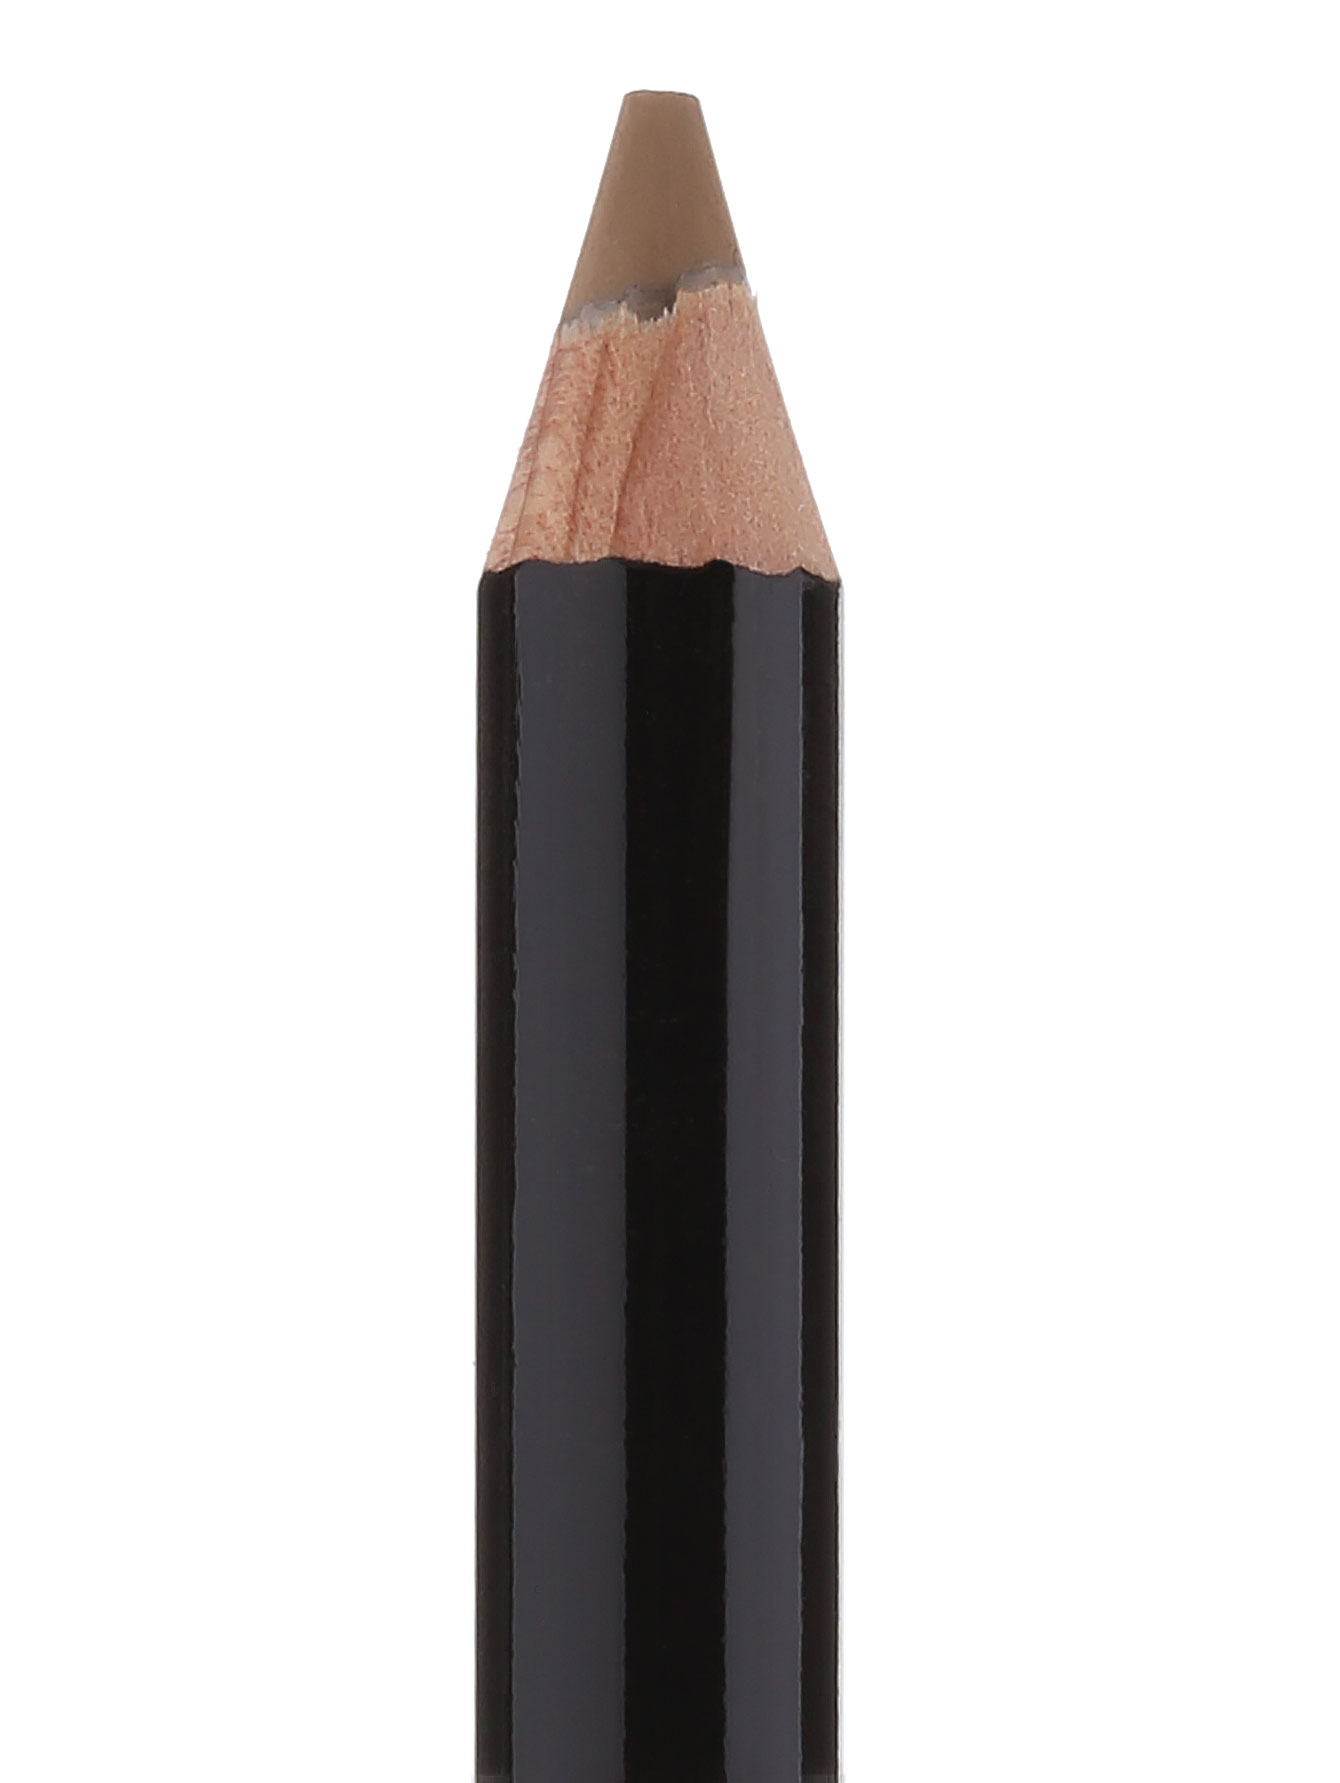  Карандаш для бровей - Dark blonde, Brow pencil - Общий вид